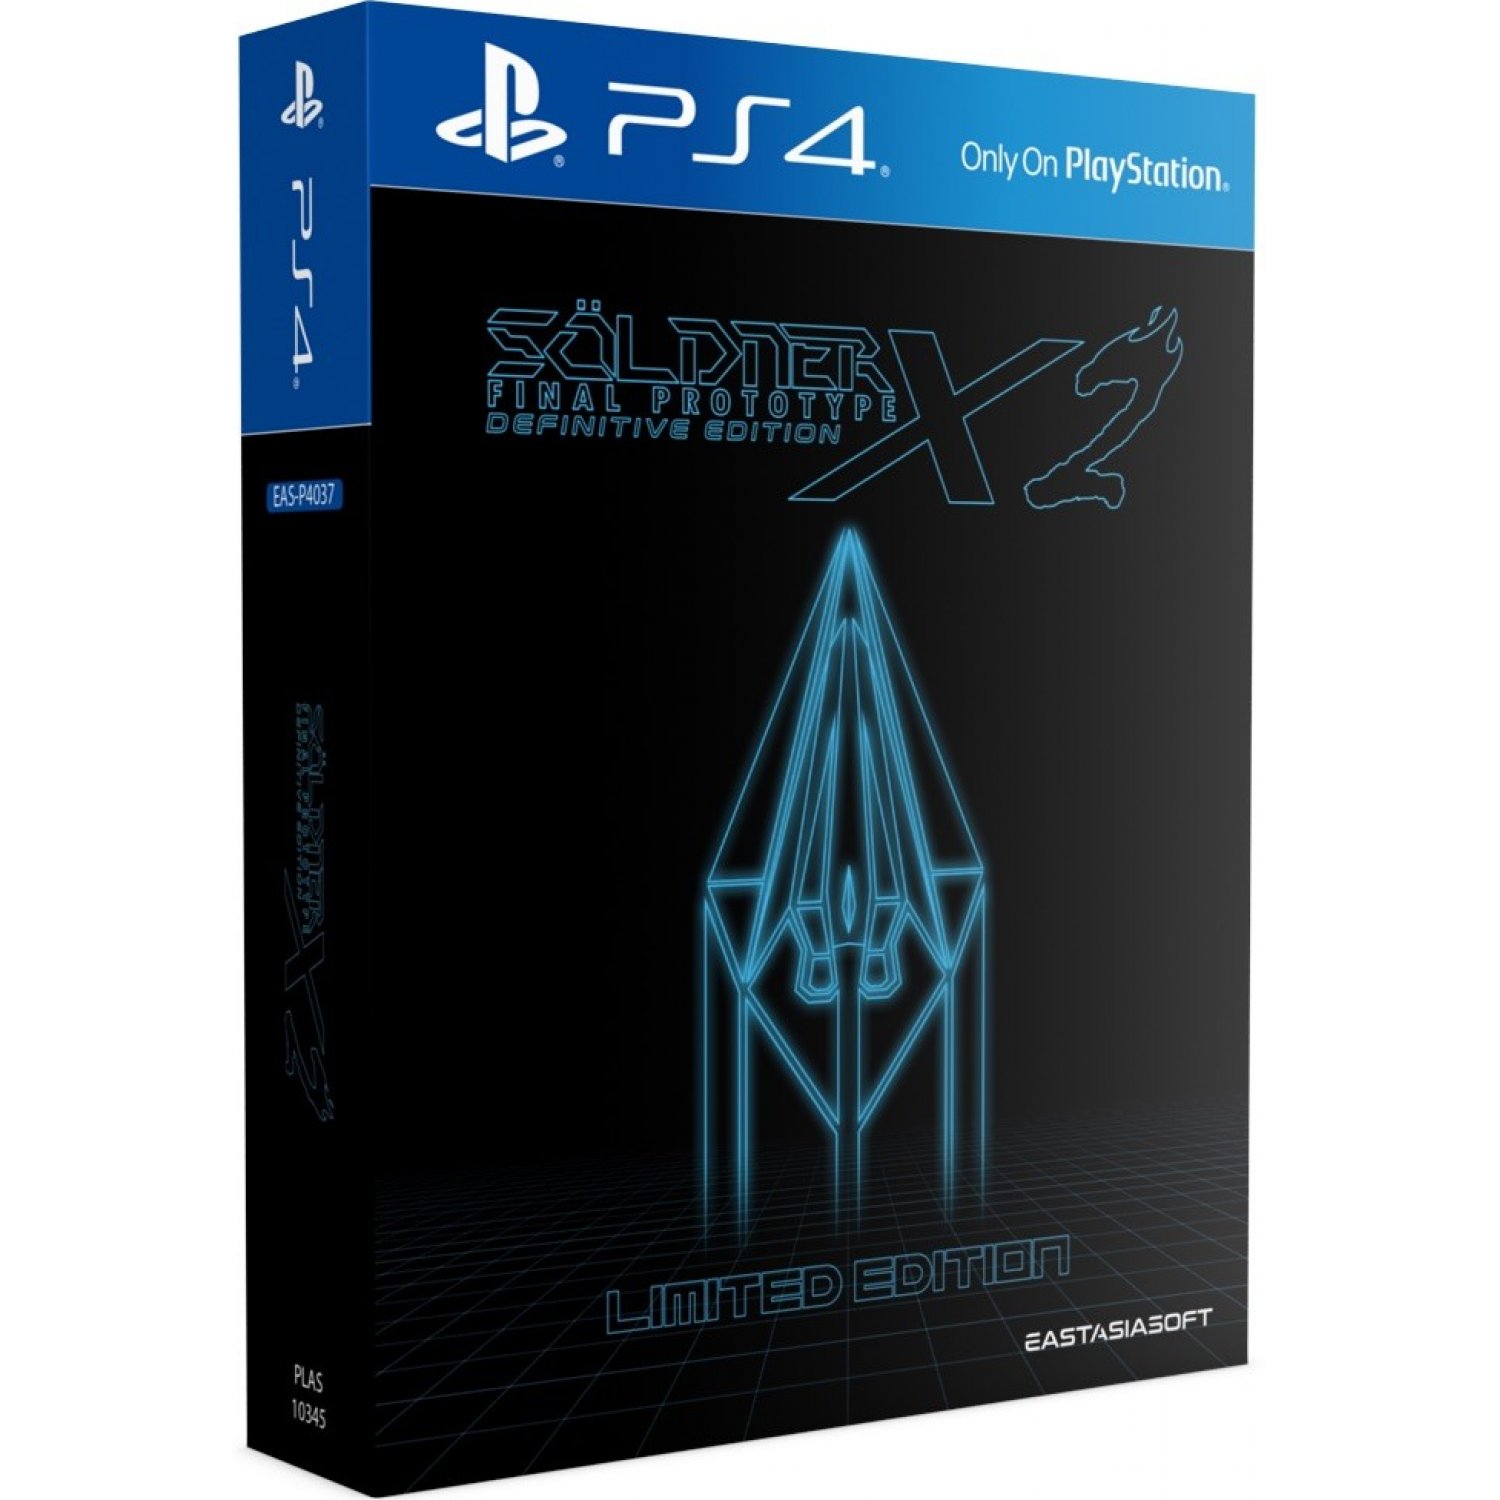 SÖLDNER-X 2 FINAL PROTOTYPE DEFINITIVE EDITION LIMITED EDITION - PlayStation 4 Játékok